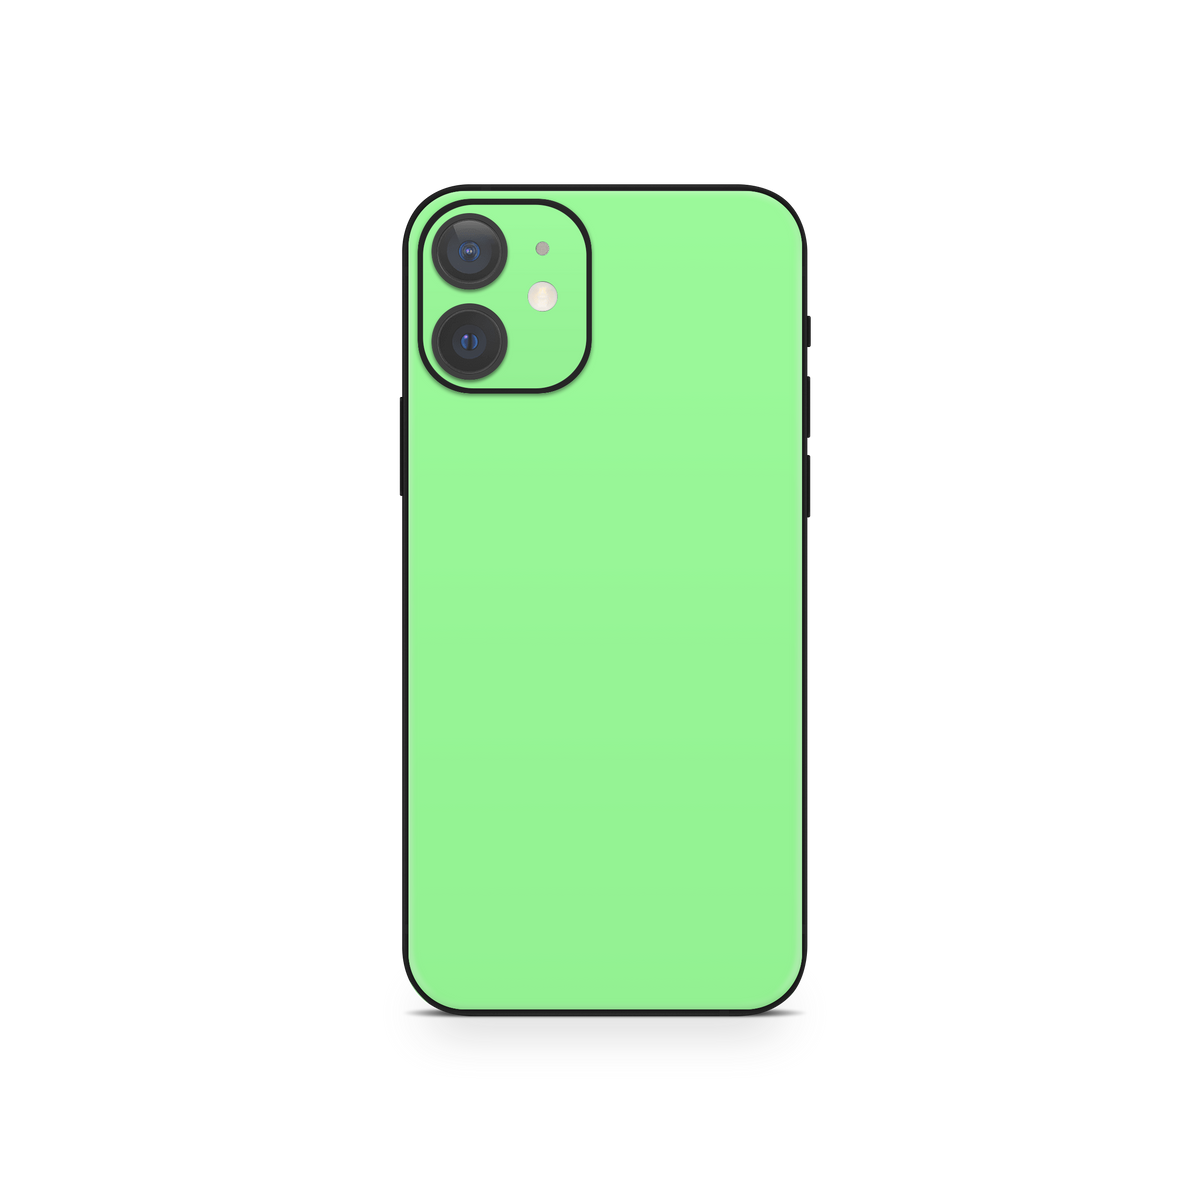 Apple iPhone 12 Mint Green iPhone 12 Skin